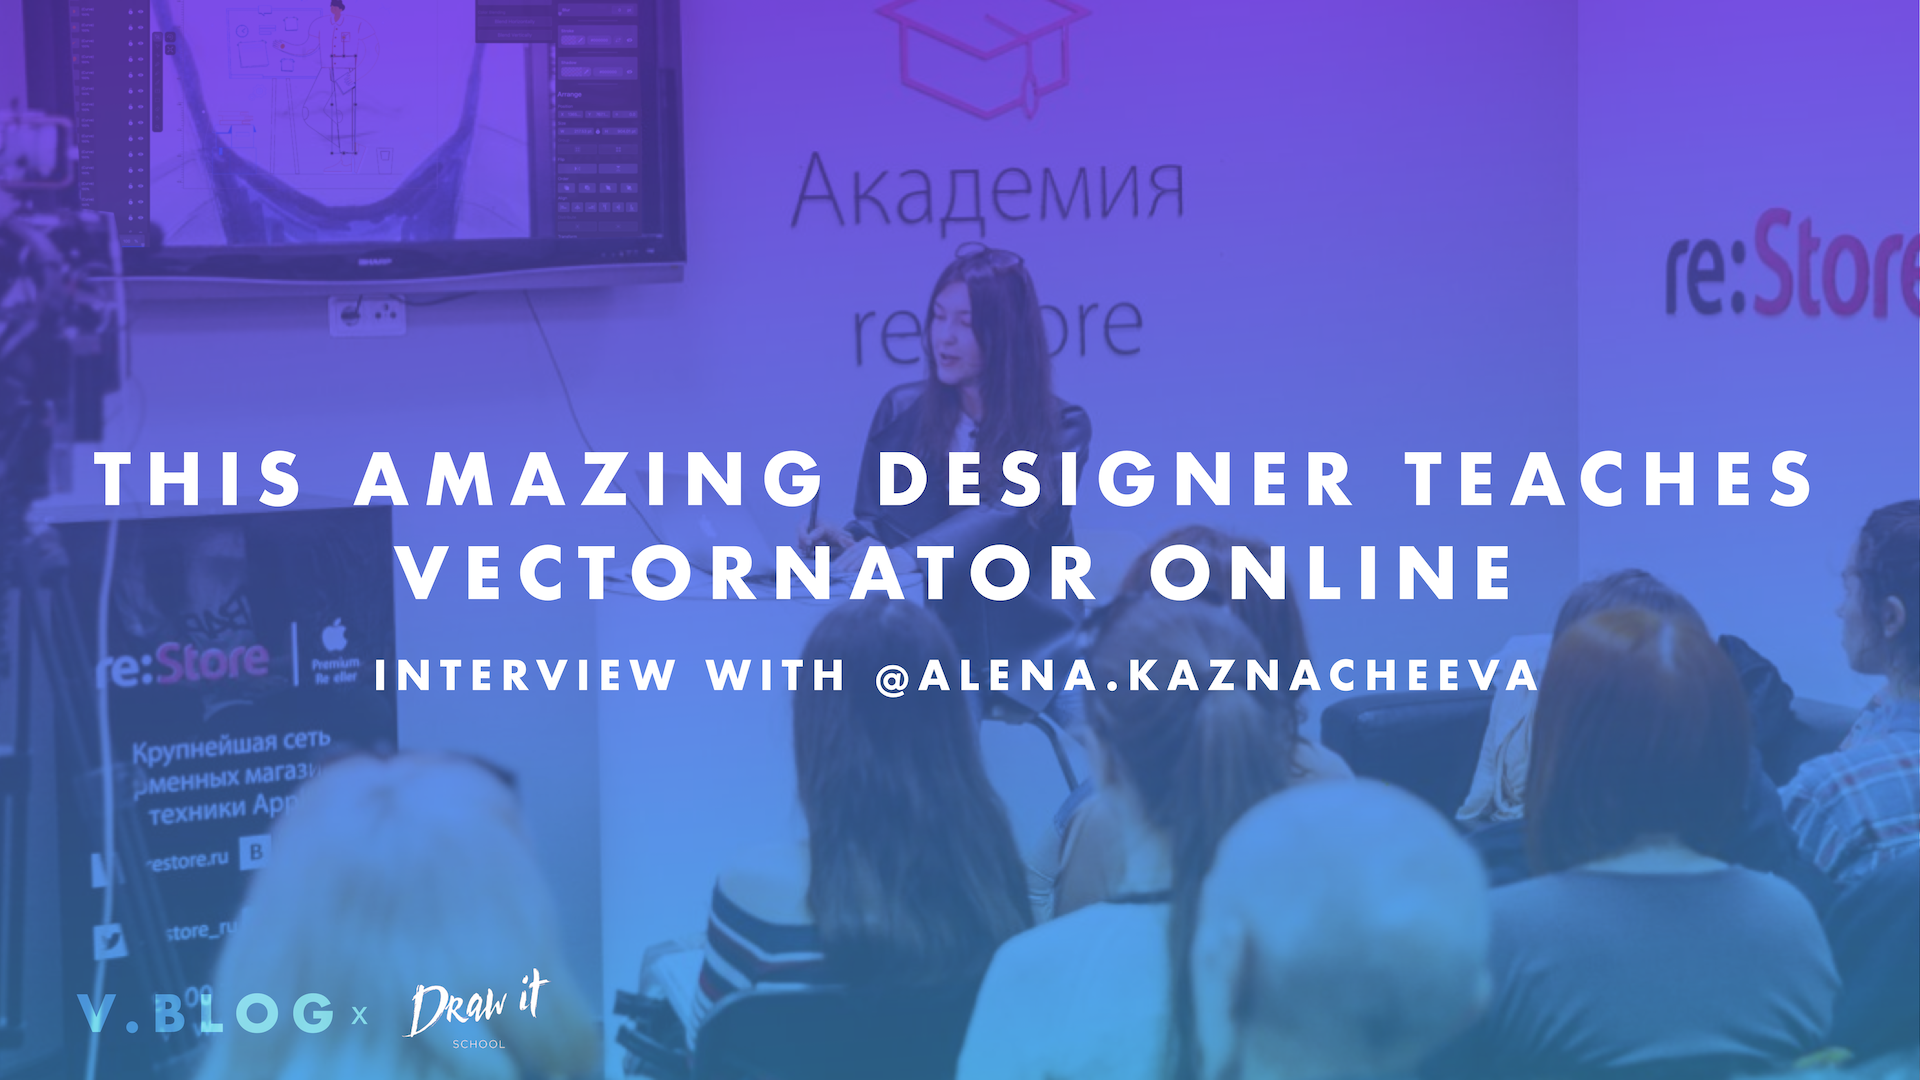 This amazing designer teaches Vectornator online | Linearity